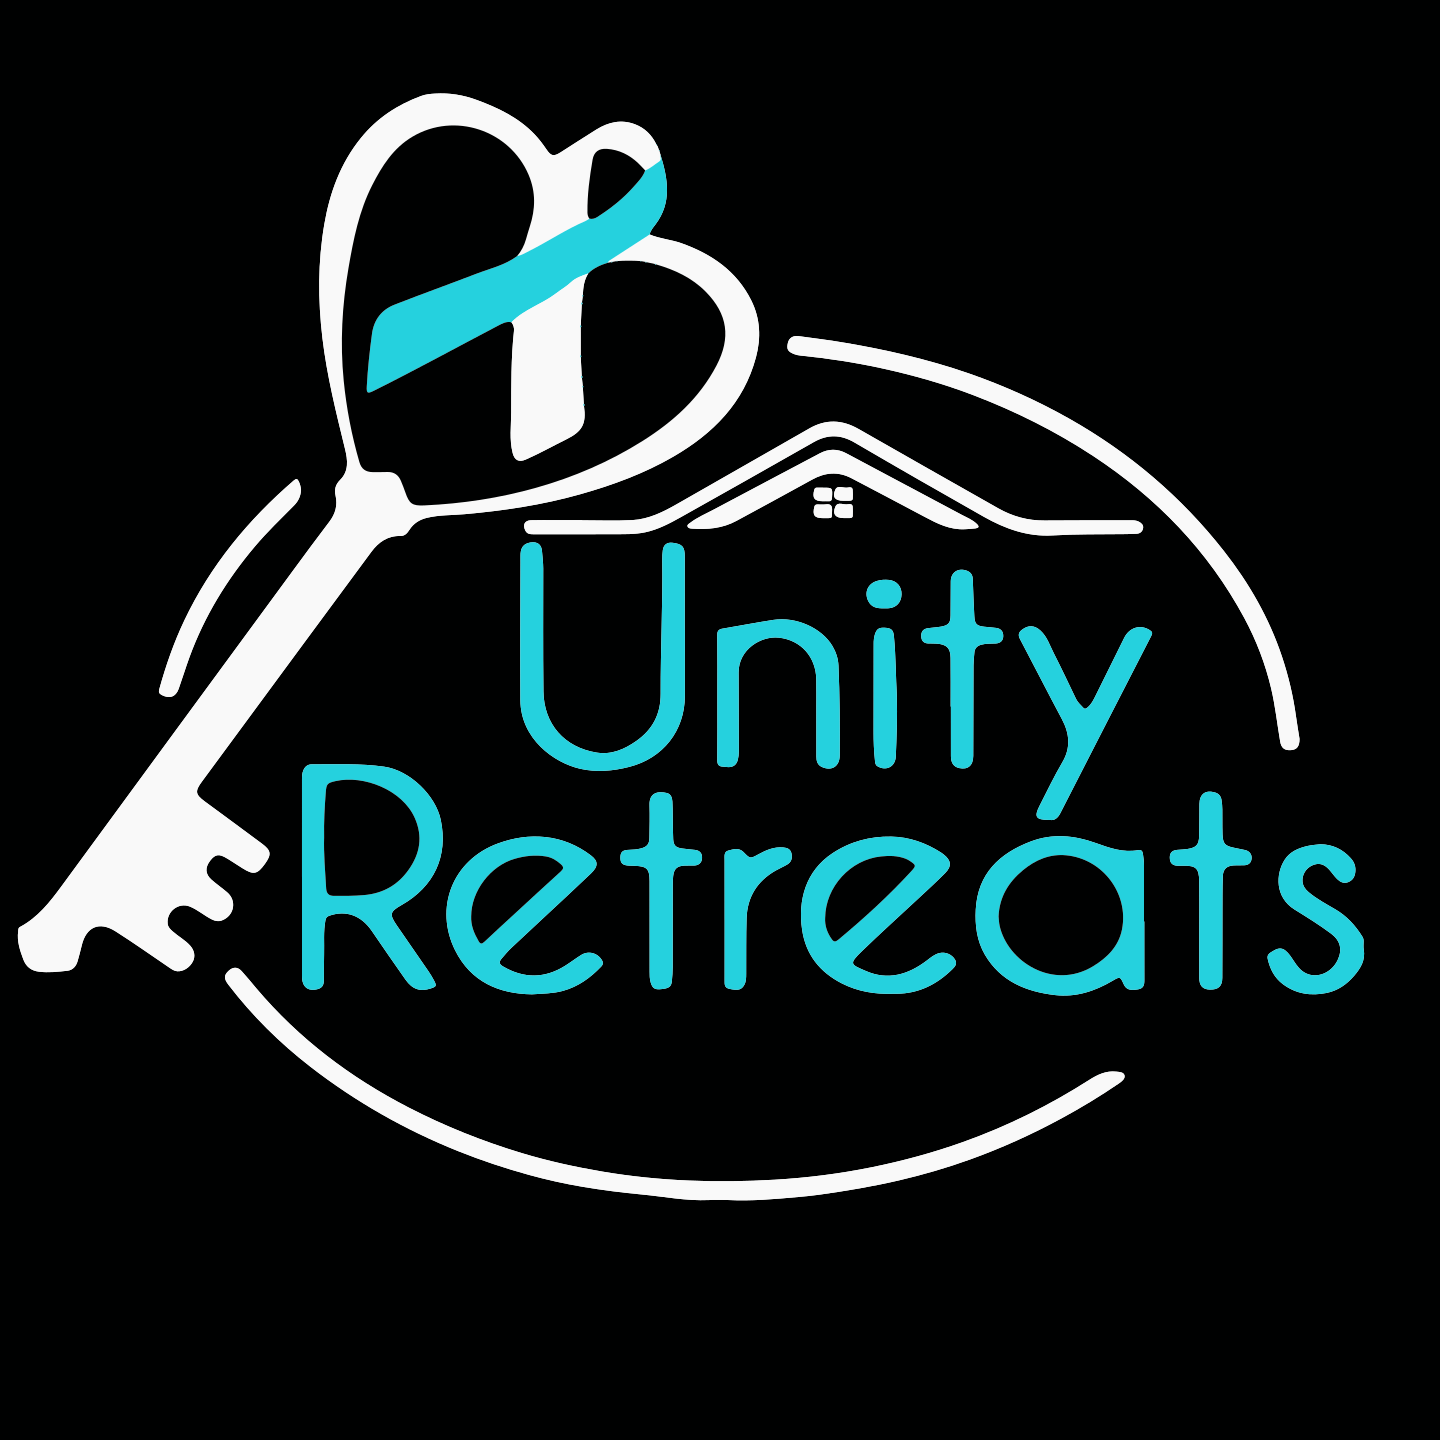 Unity Retreats, LLC